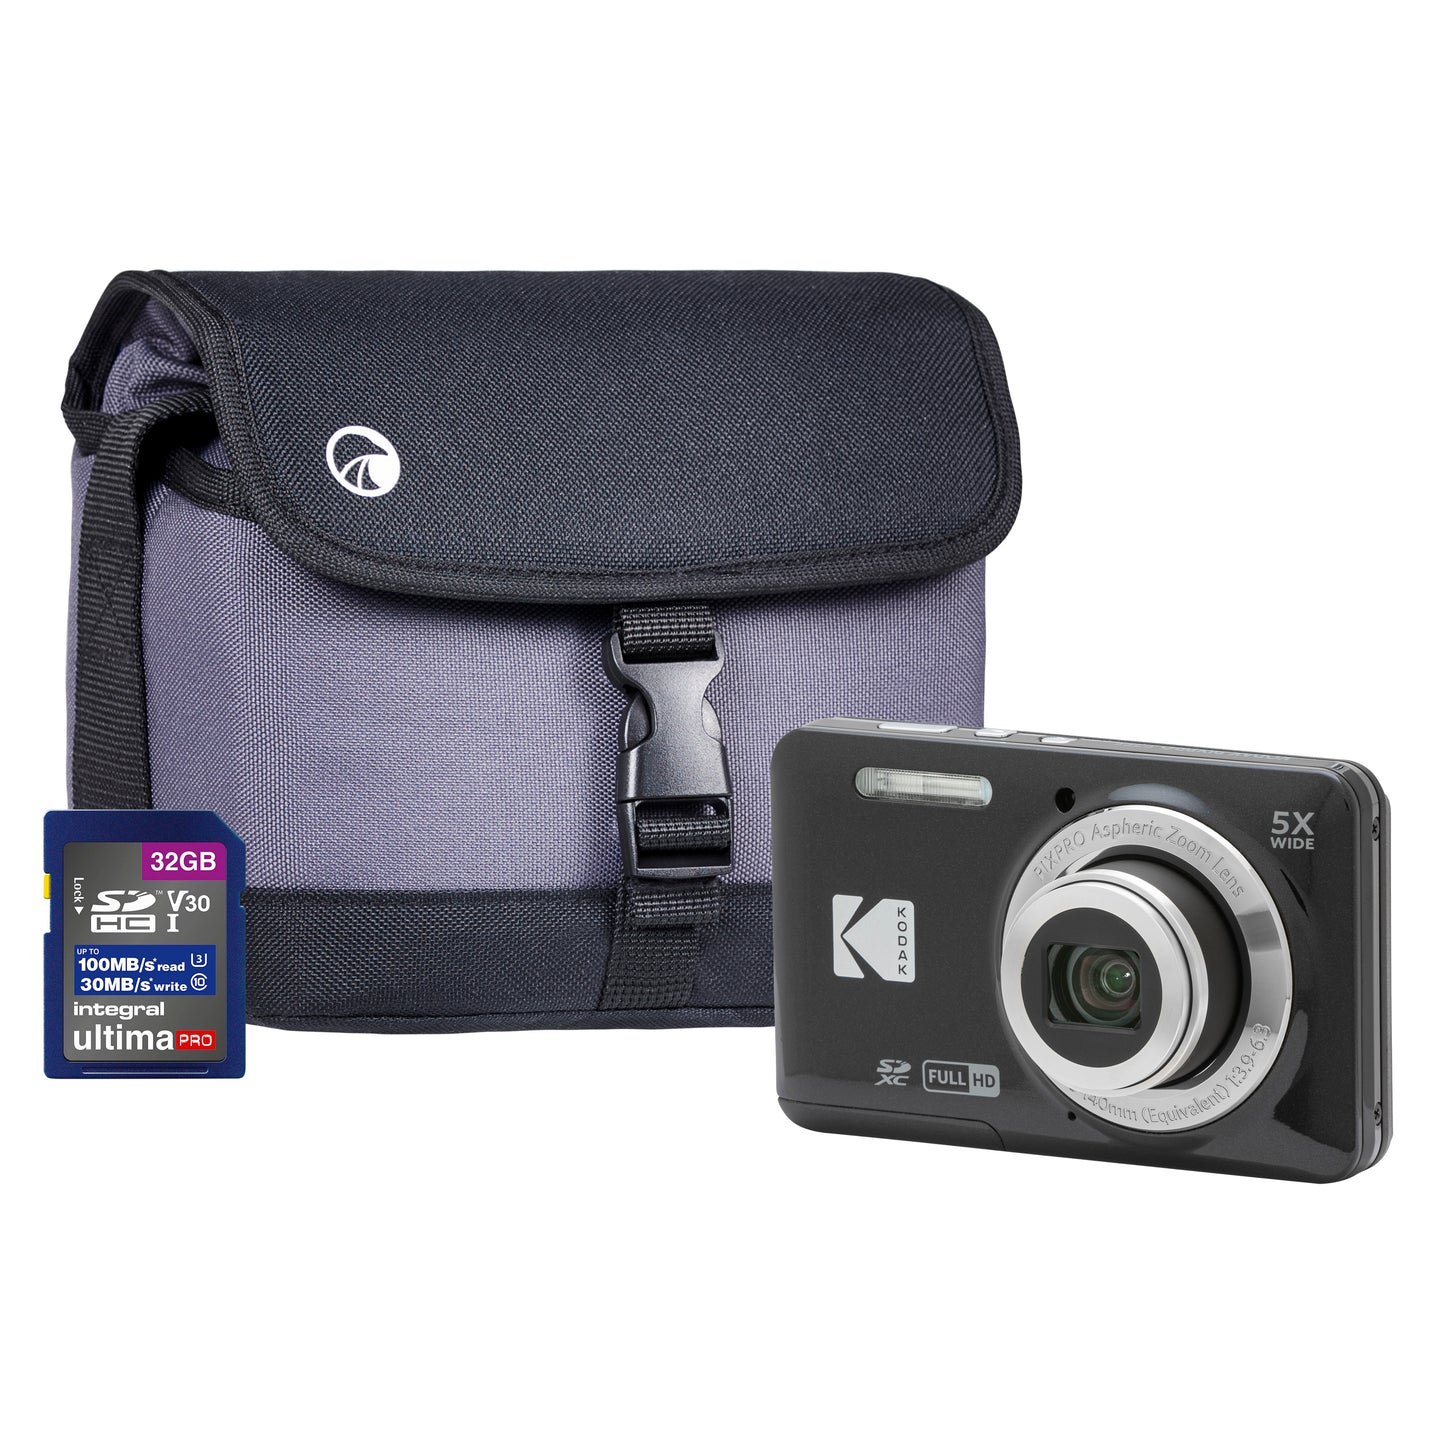 Kodak PIXPRO X55 16MP 5x Zoom Compact Camera - Black - maplin.co.uk